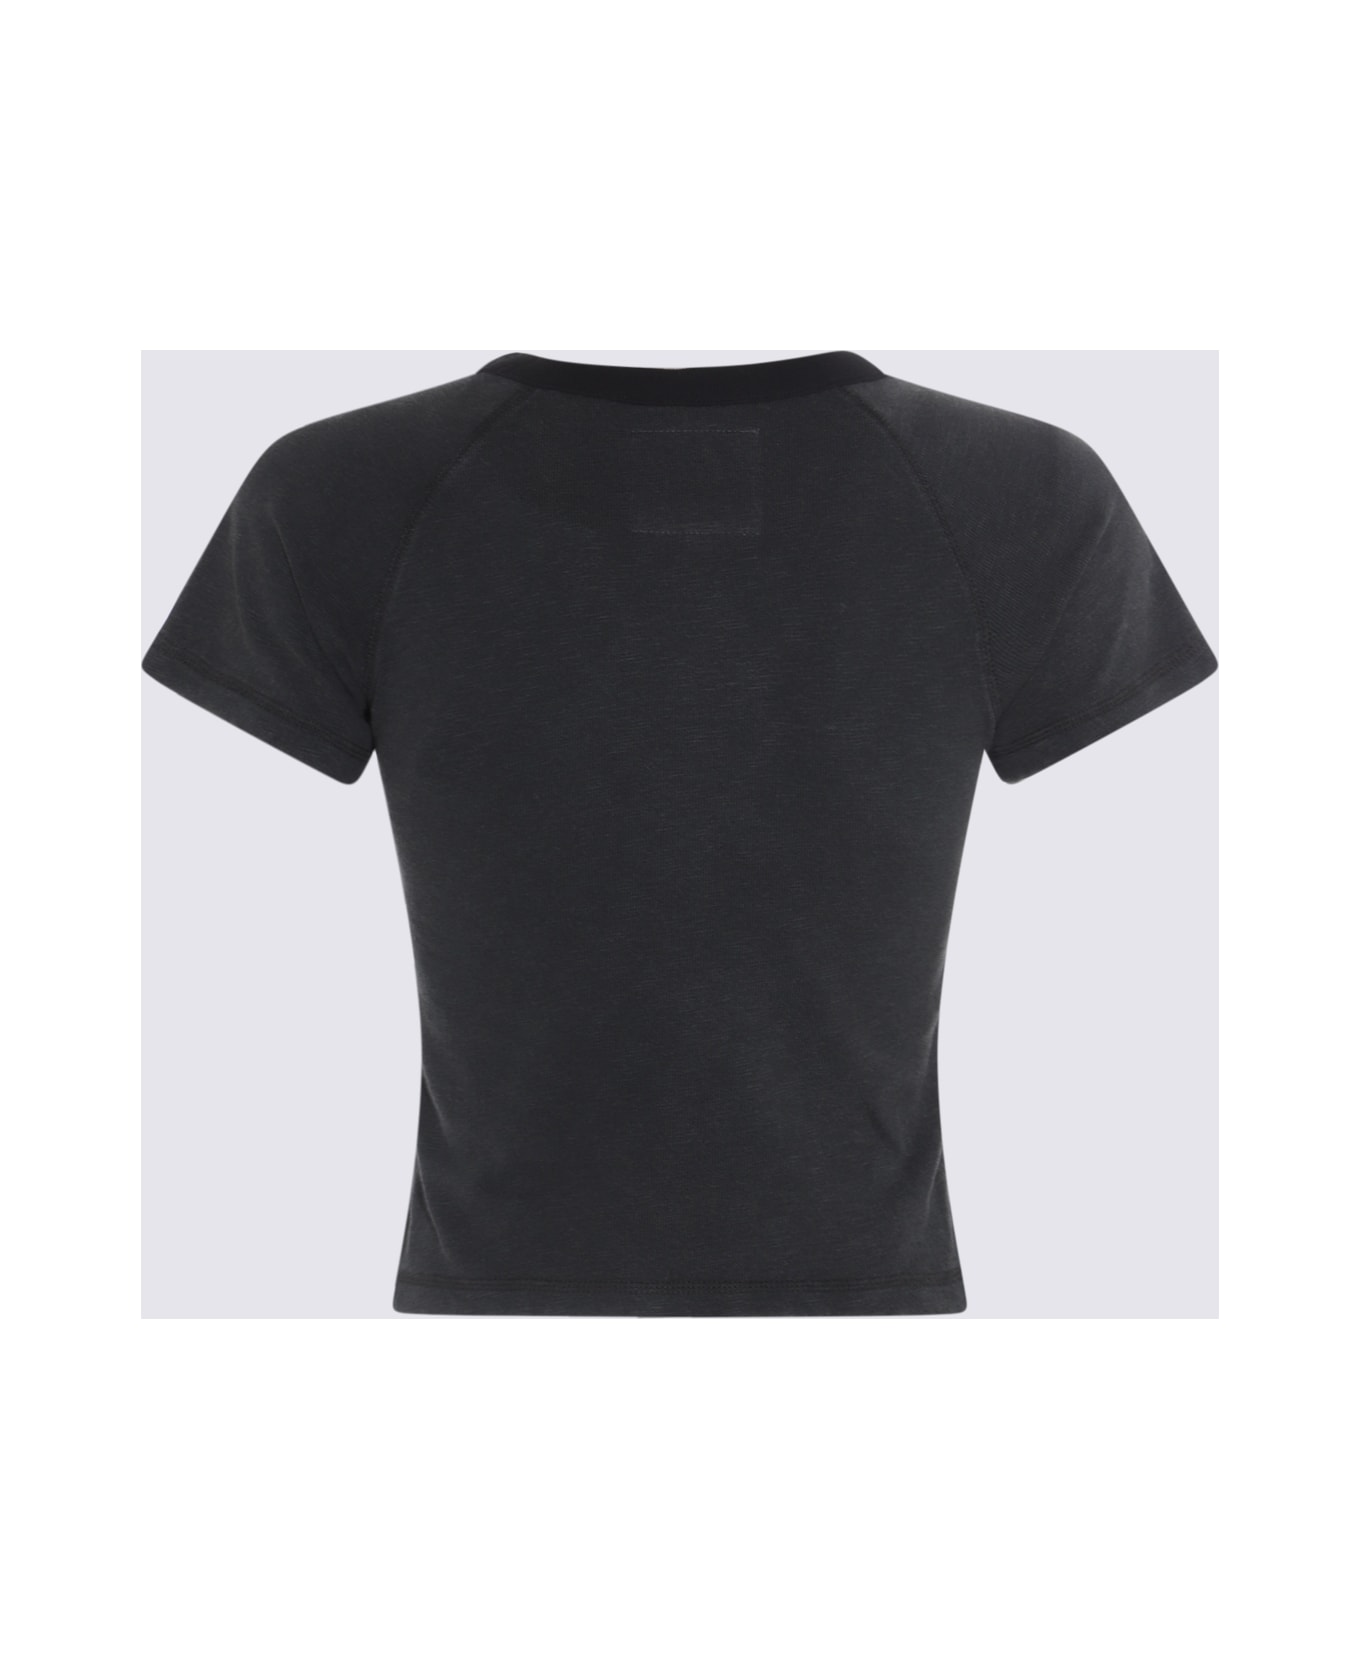 (di)vision Black Cotton T-shirt - Black